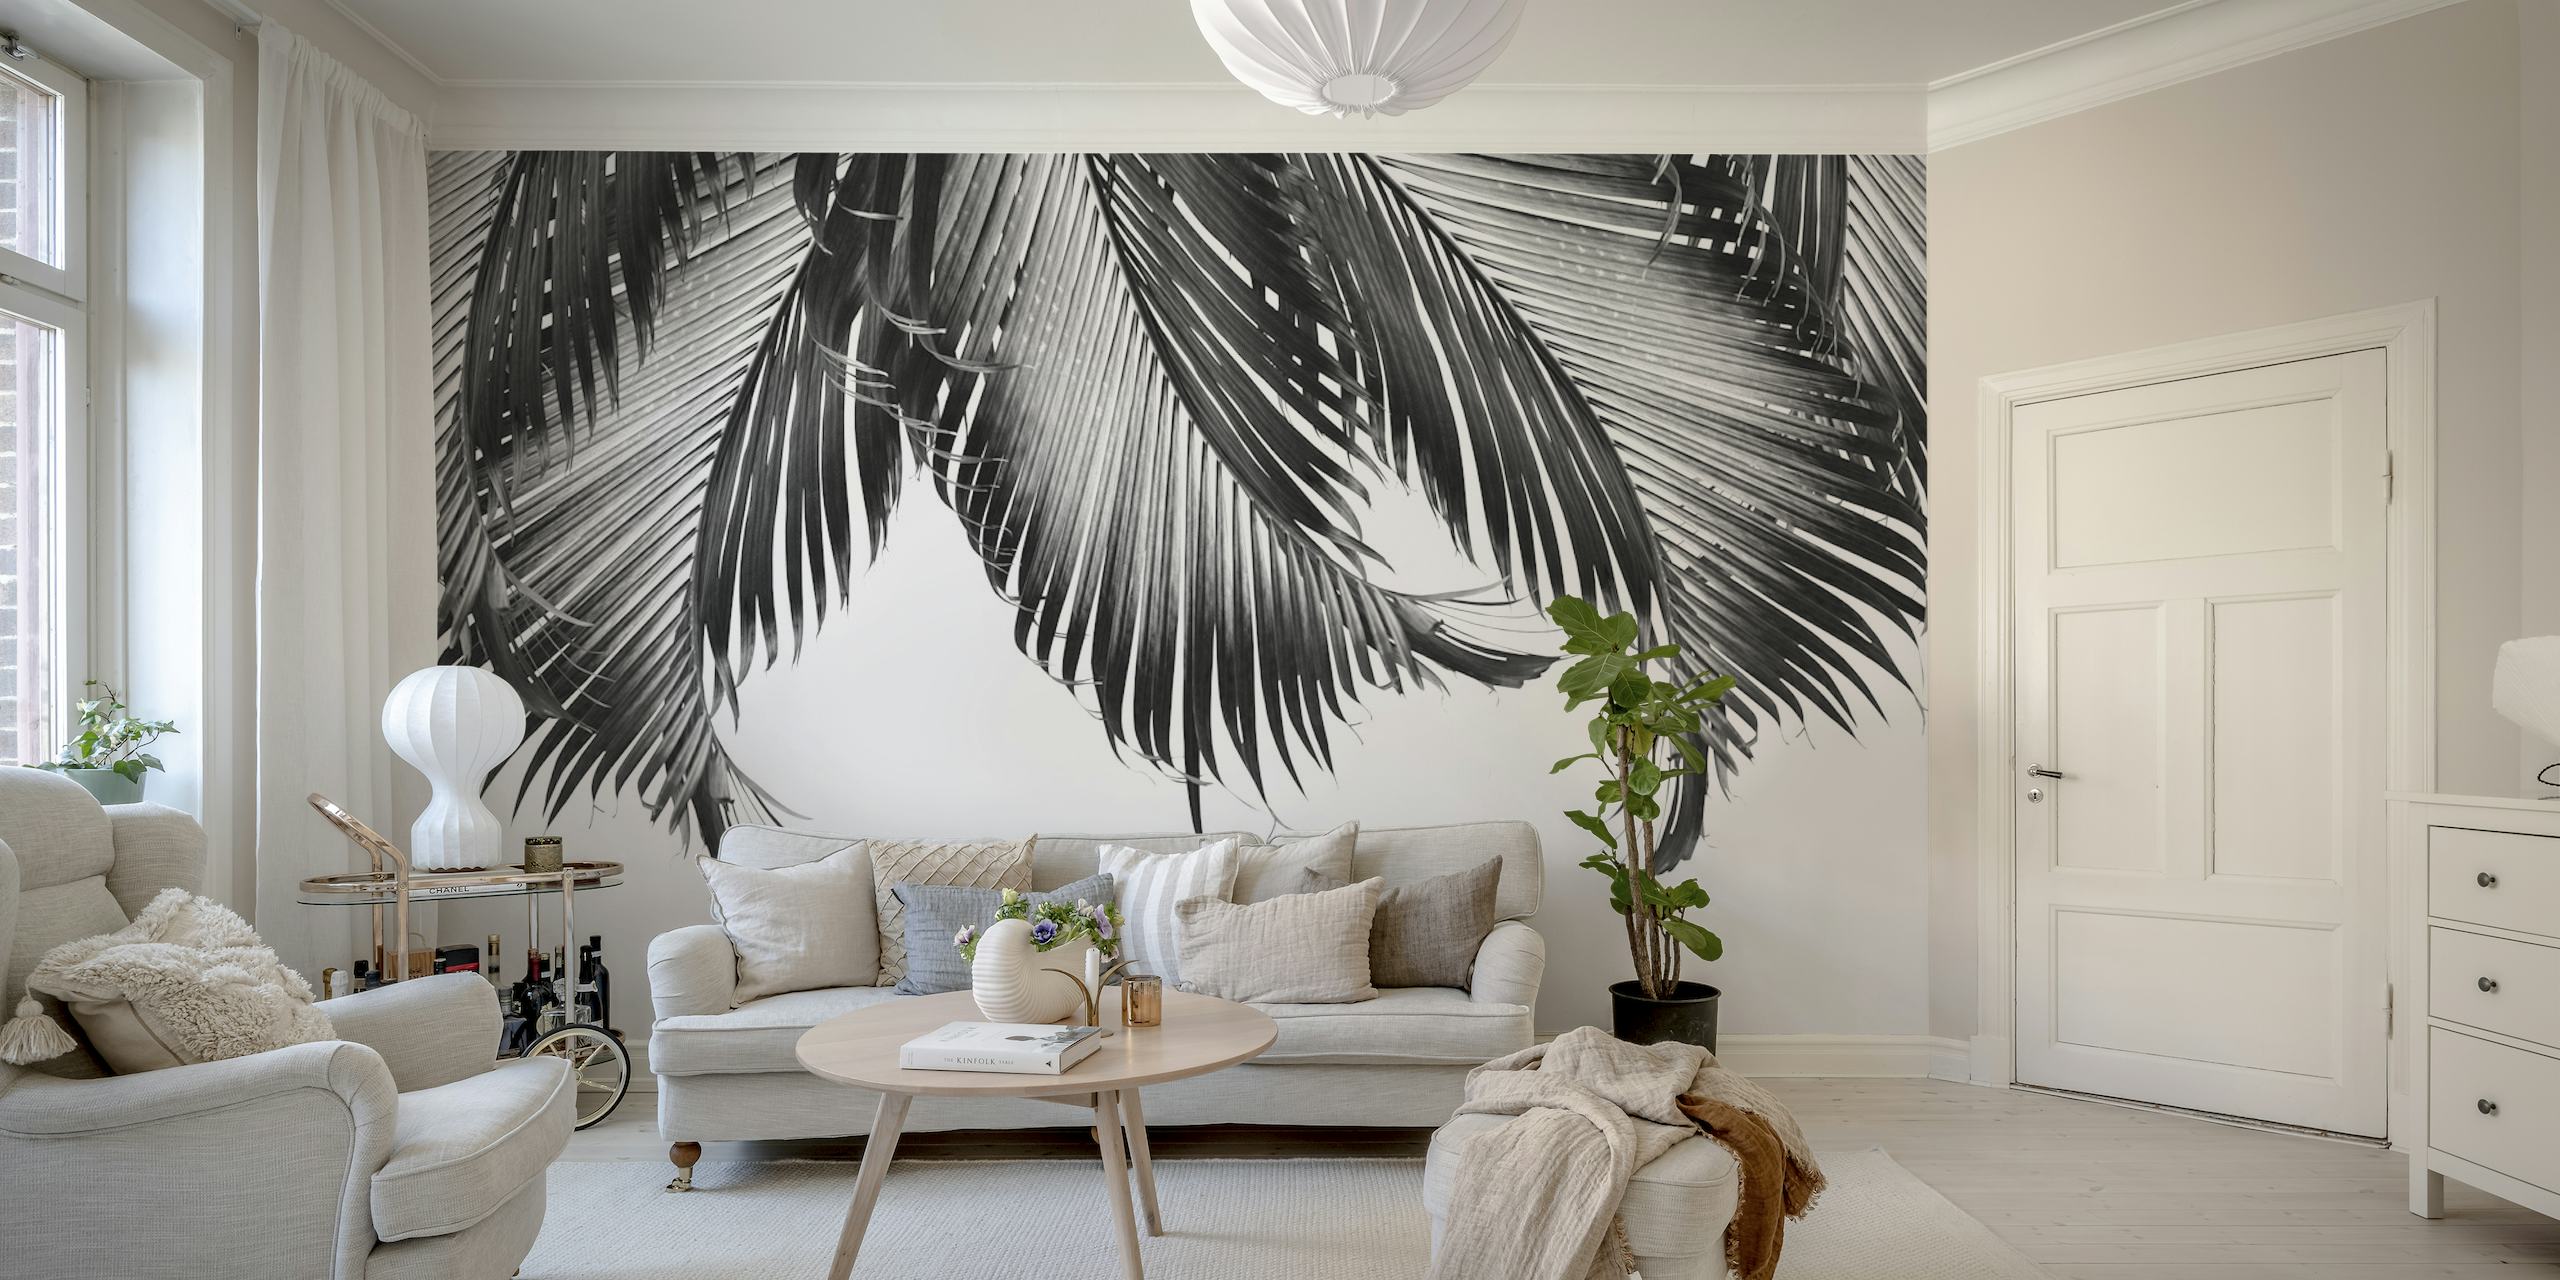 Carta da parati dal design in foglie di palma in bianco e nero per un arredamento moderno